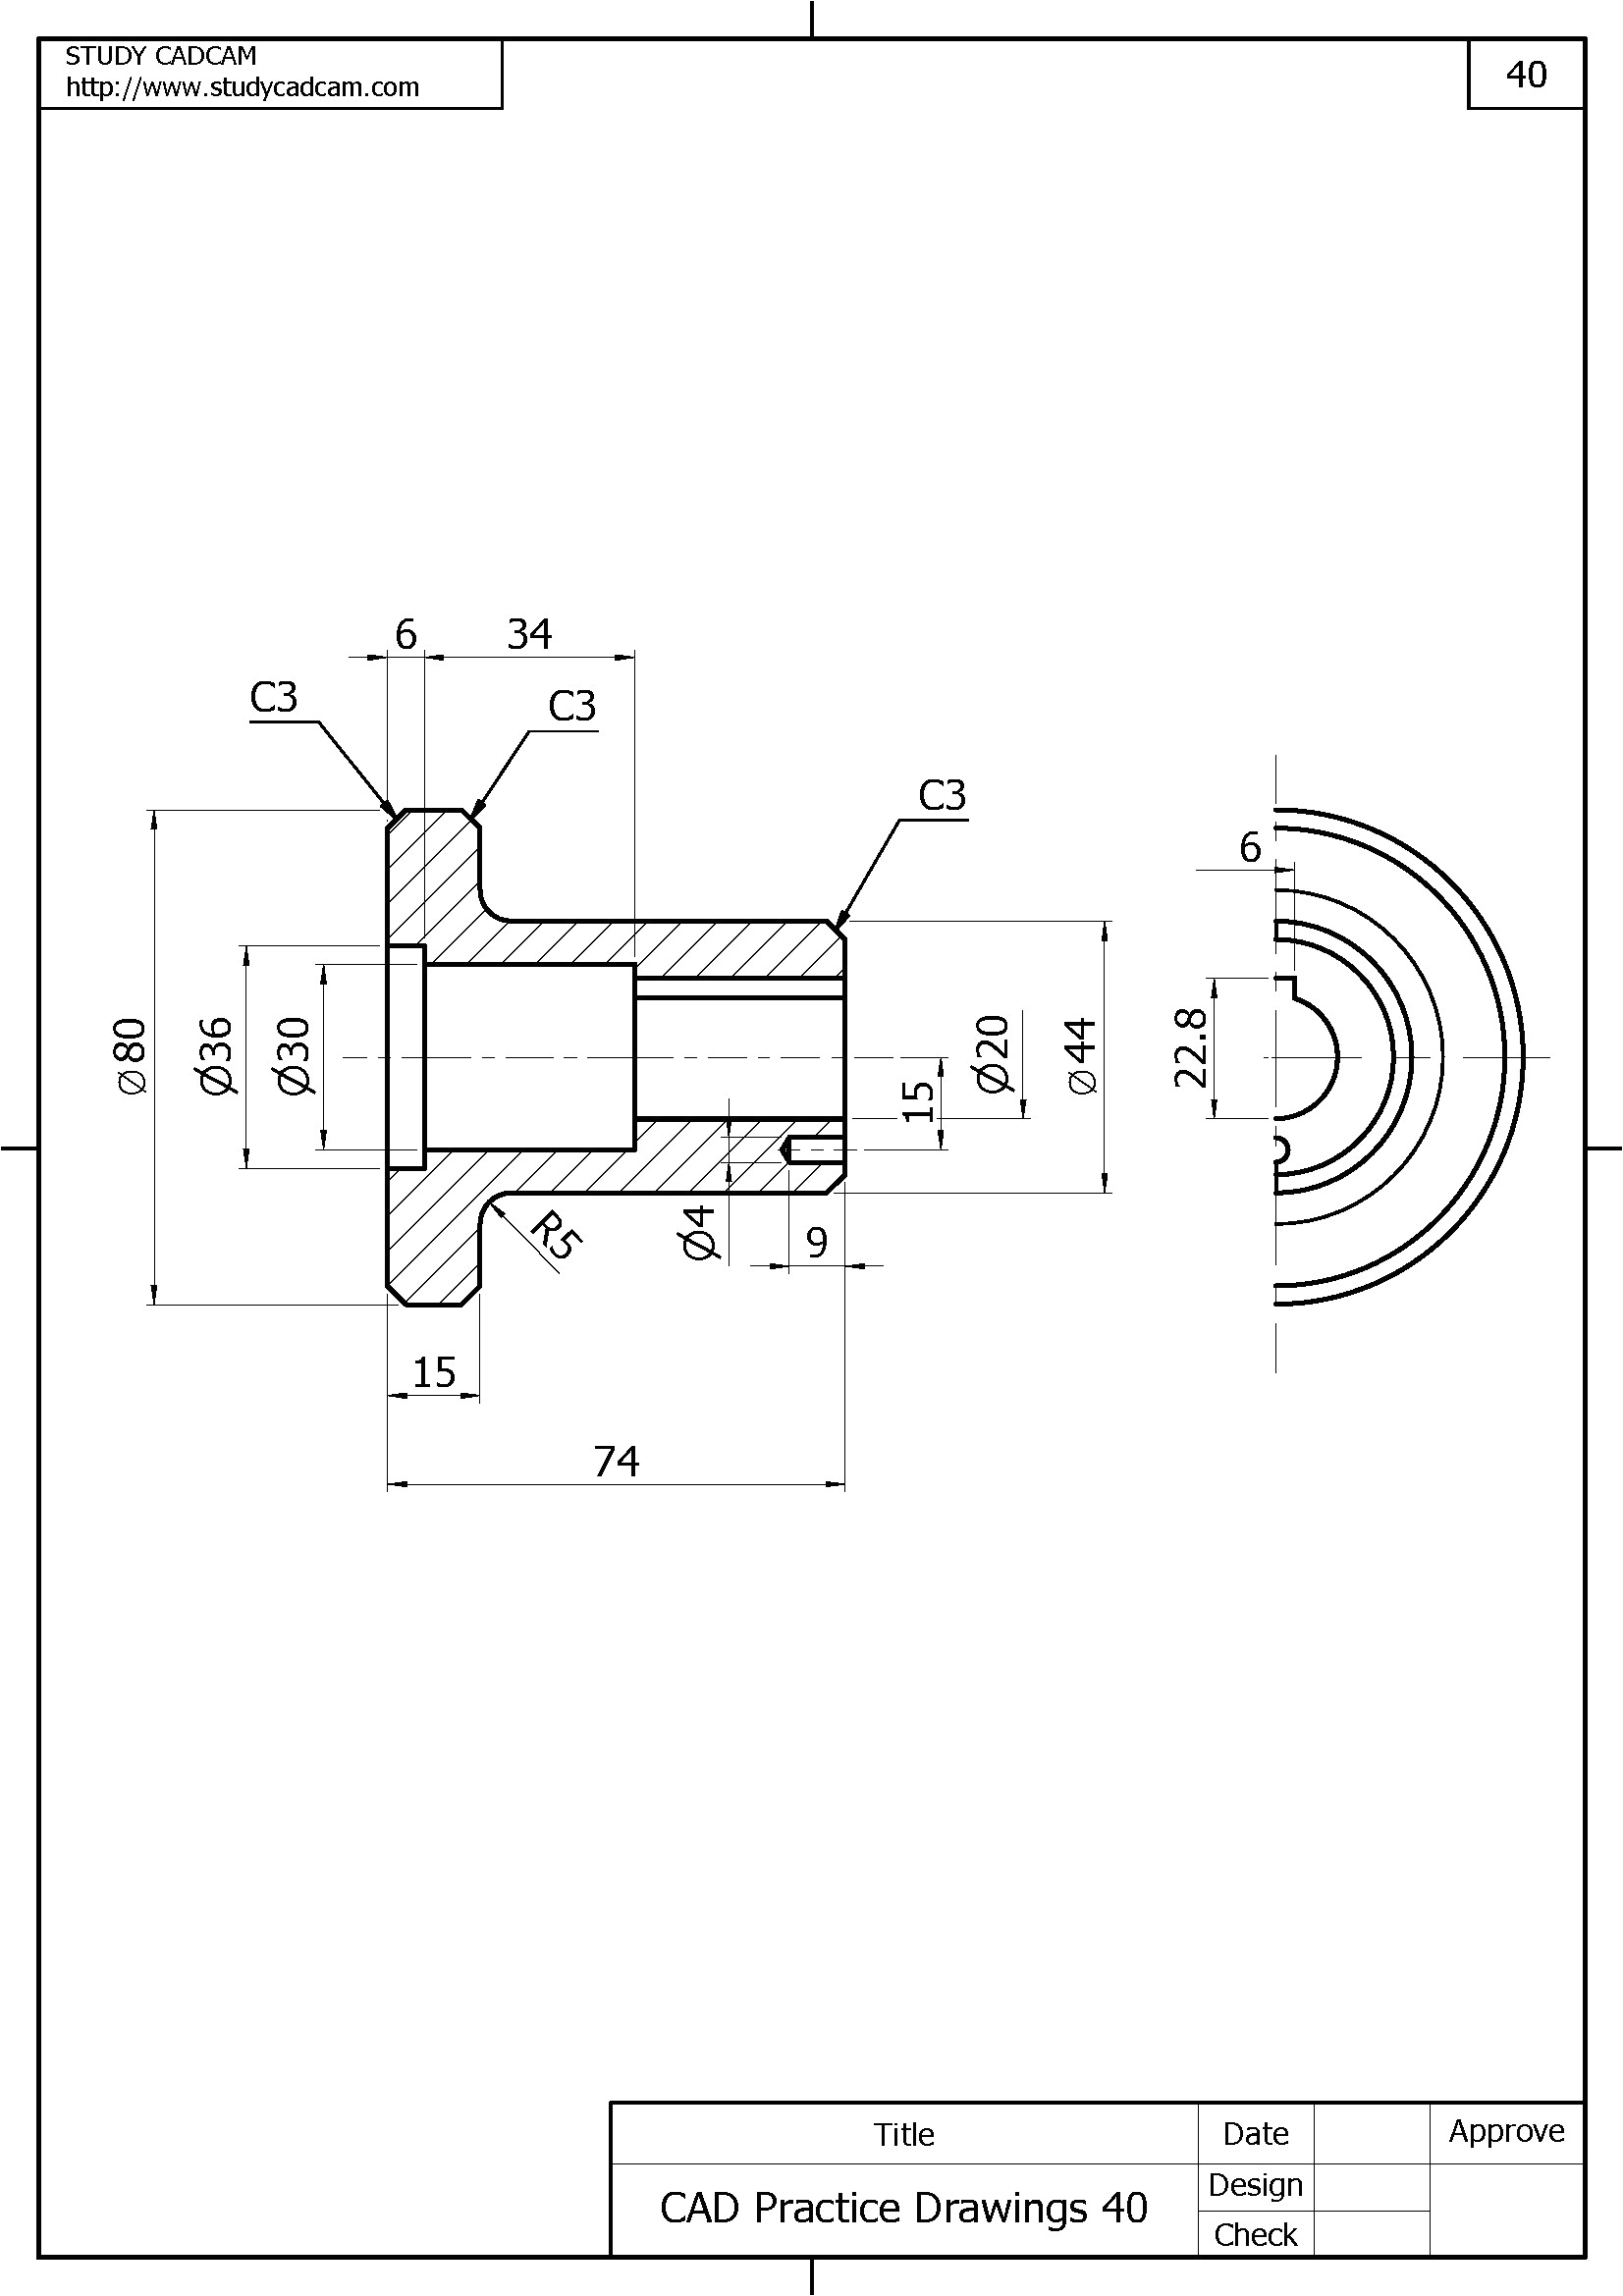 hvac wiring diagram cad wiring diagram symbols fresh mechanical engineering diagrams hvac diagram best hvac